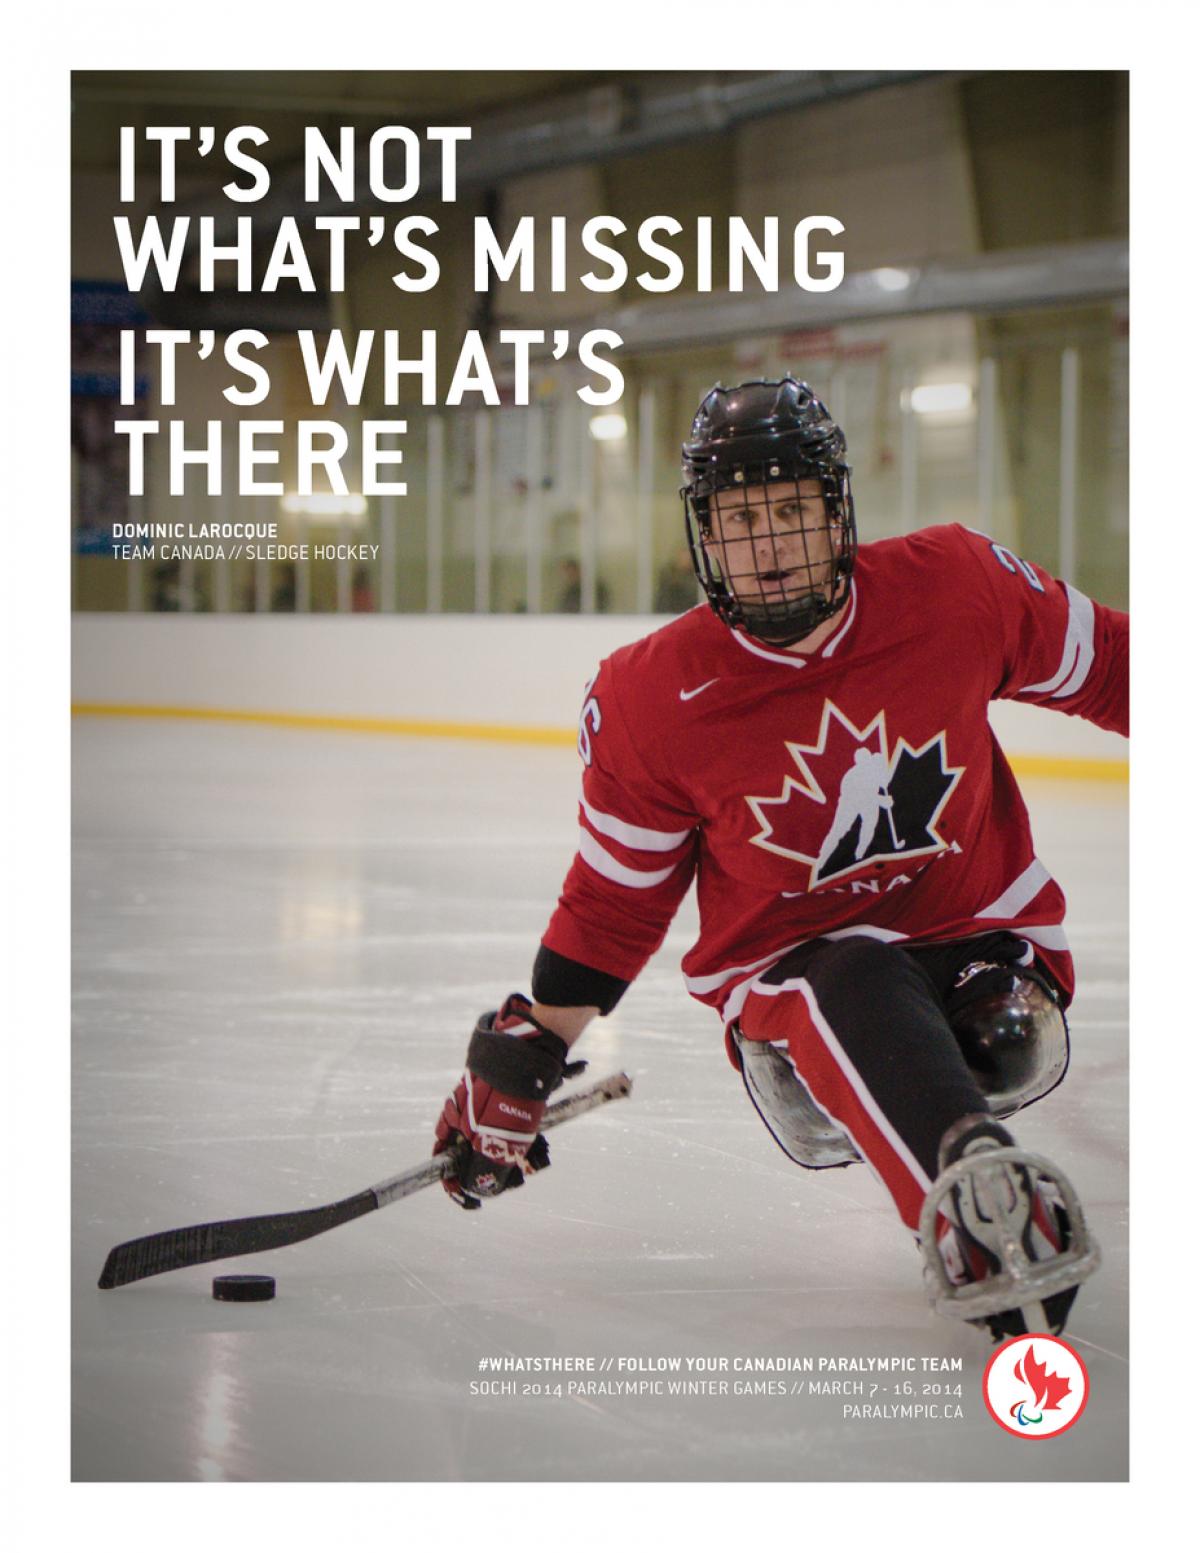 Hockey Blog In Canada: Look What I Found